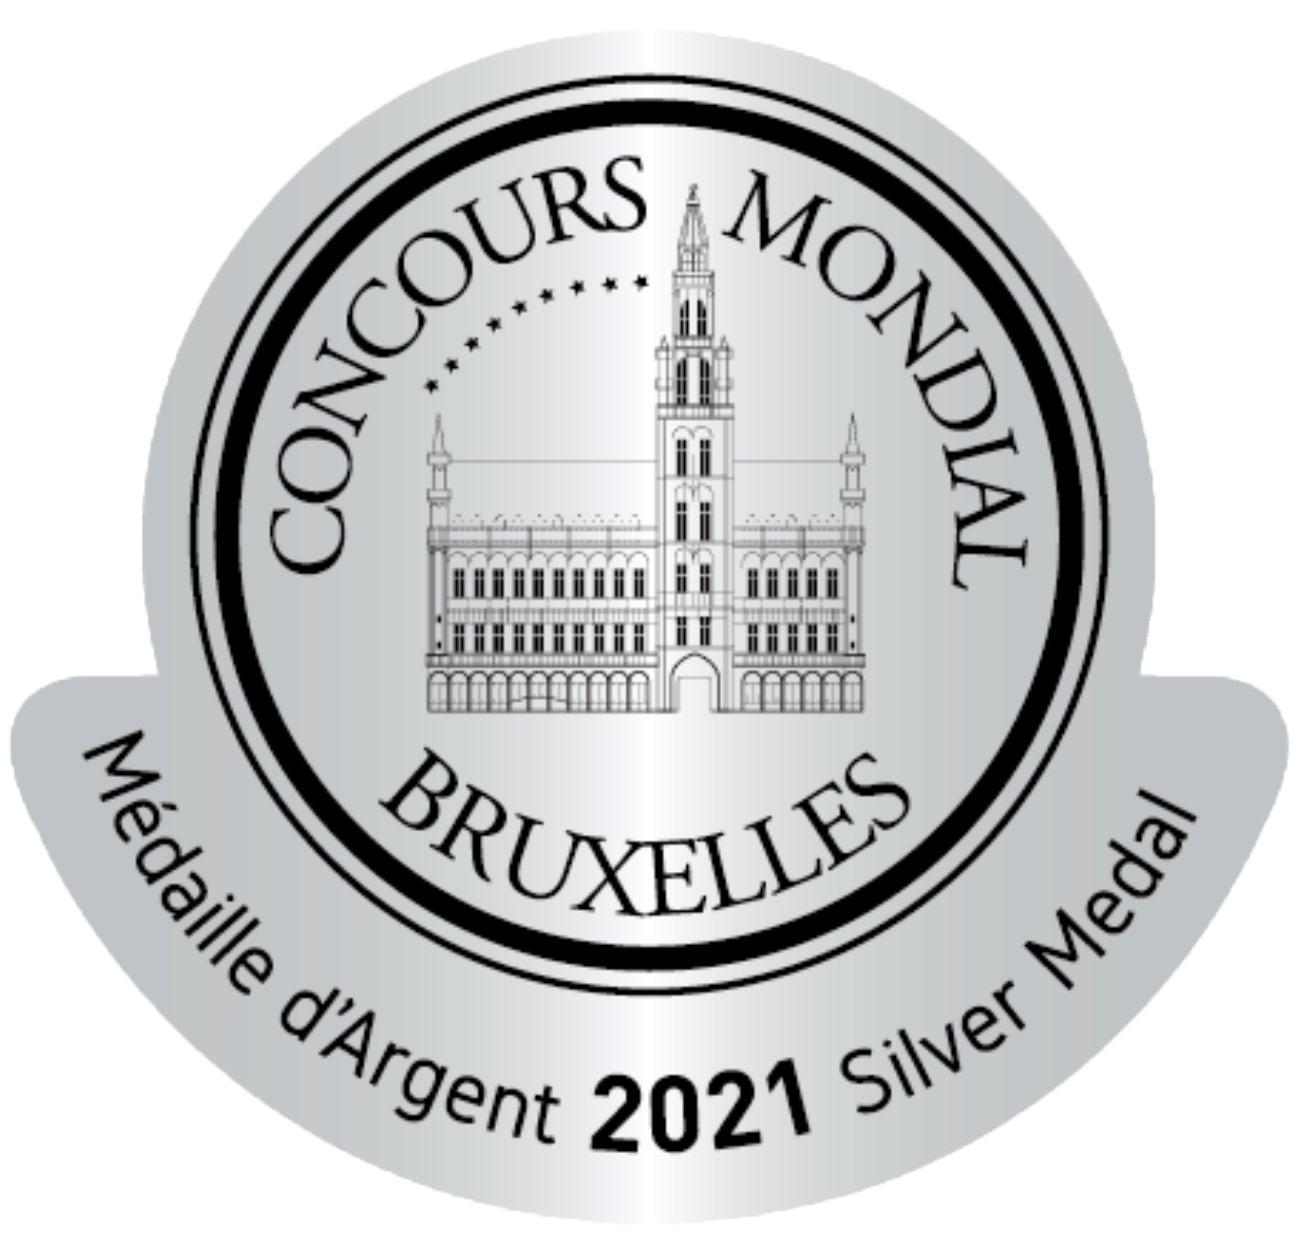 PLATA Concurso Mundial de Bruselas 2021